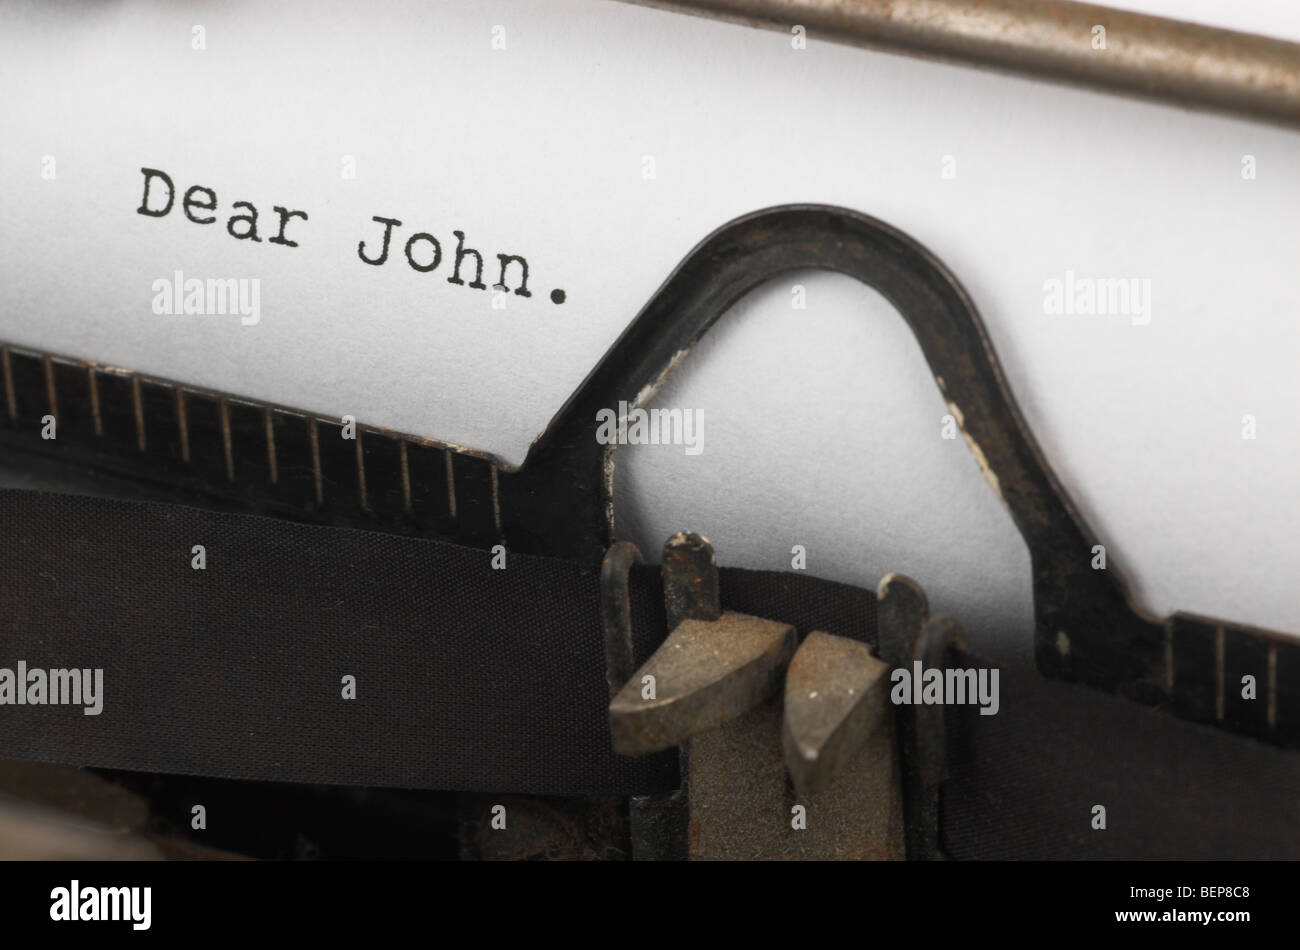 Old typewriter with text 'Dear John' Stock Photo